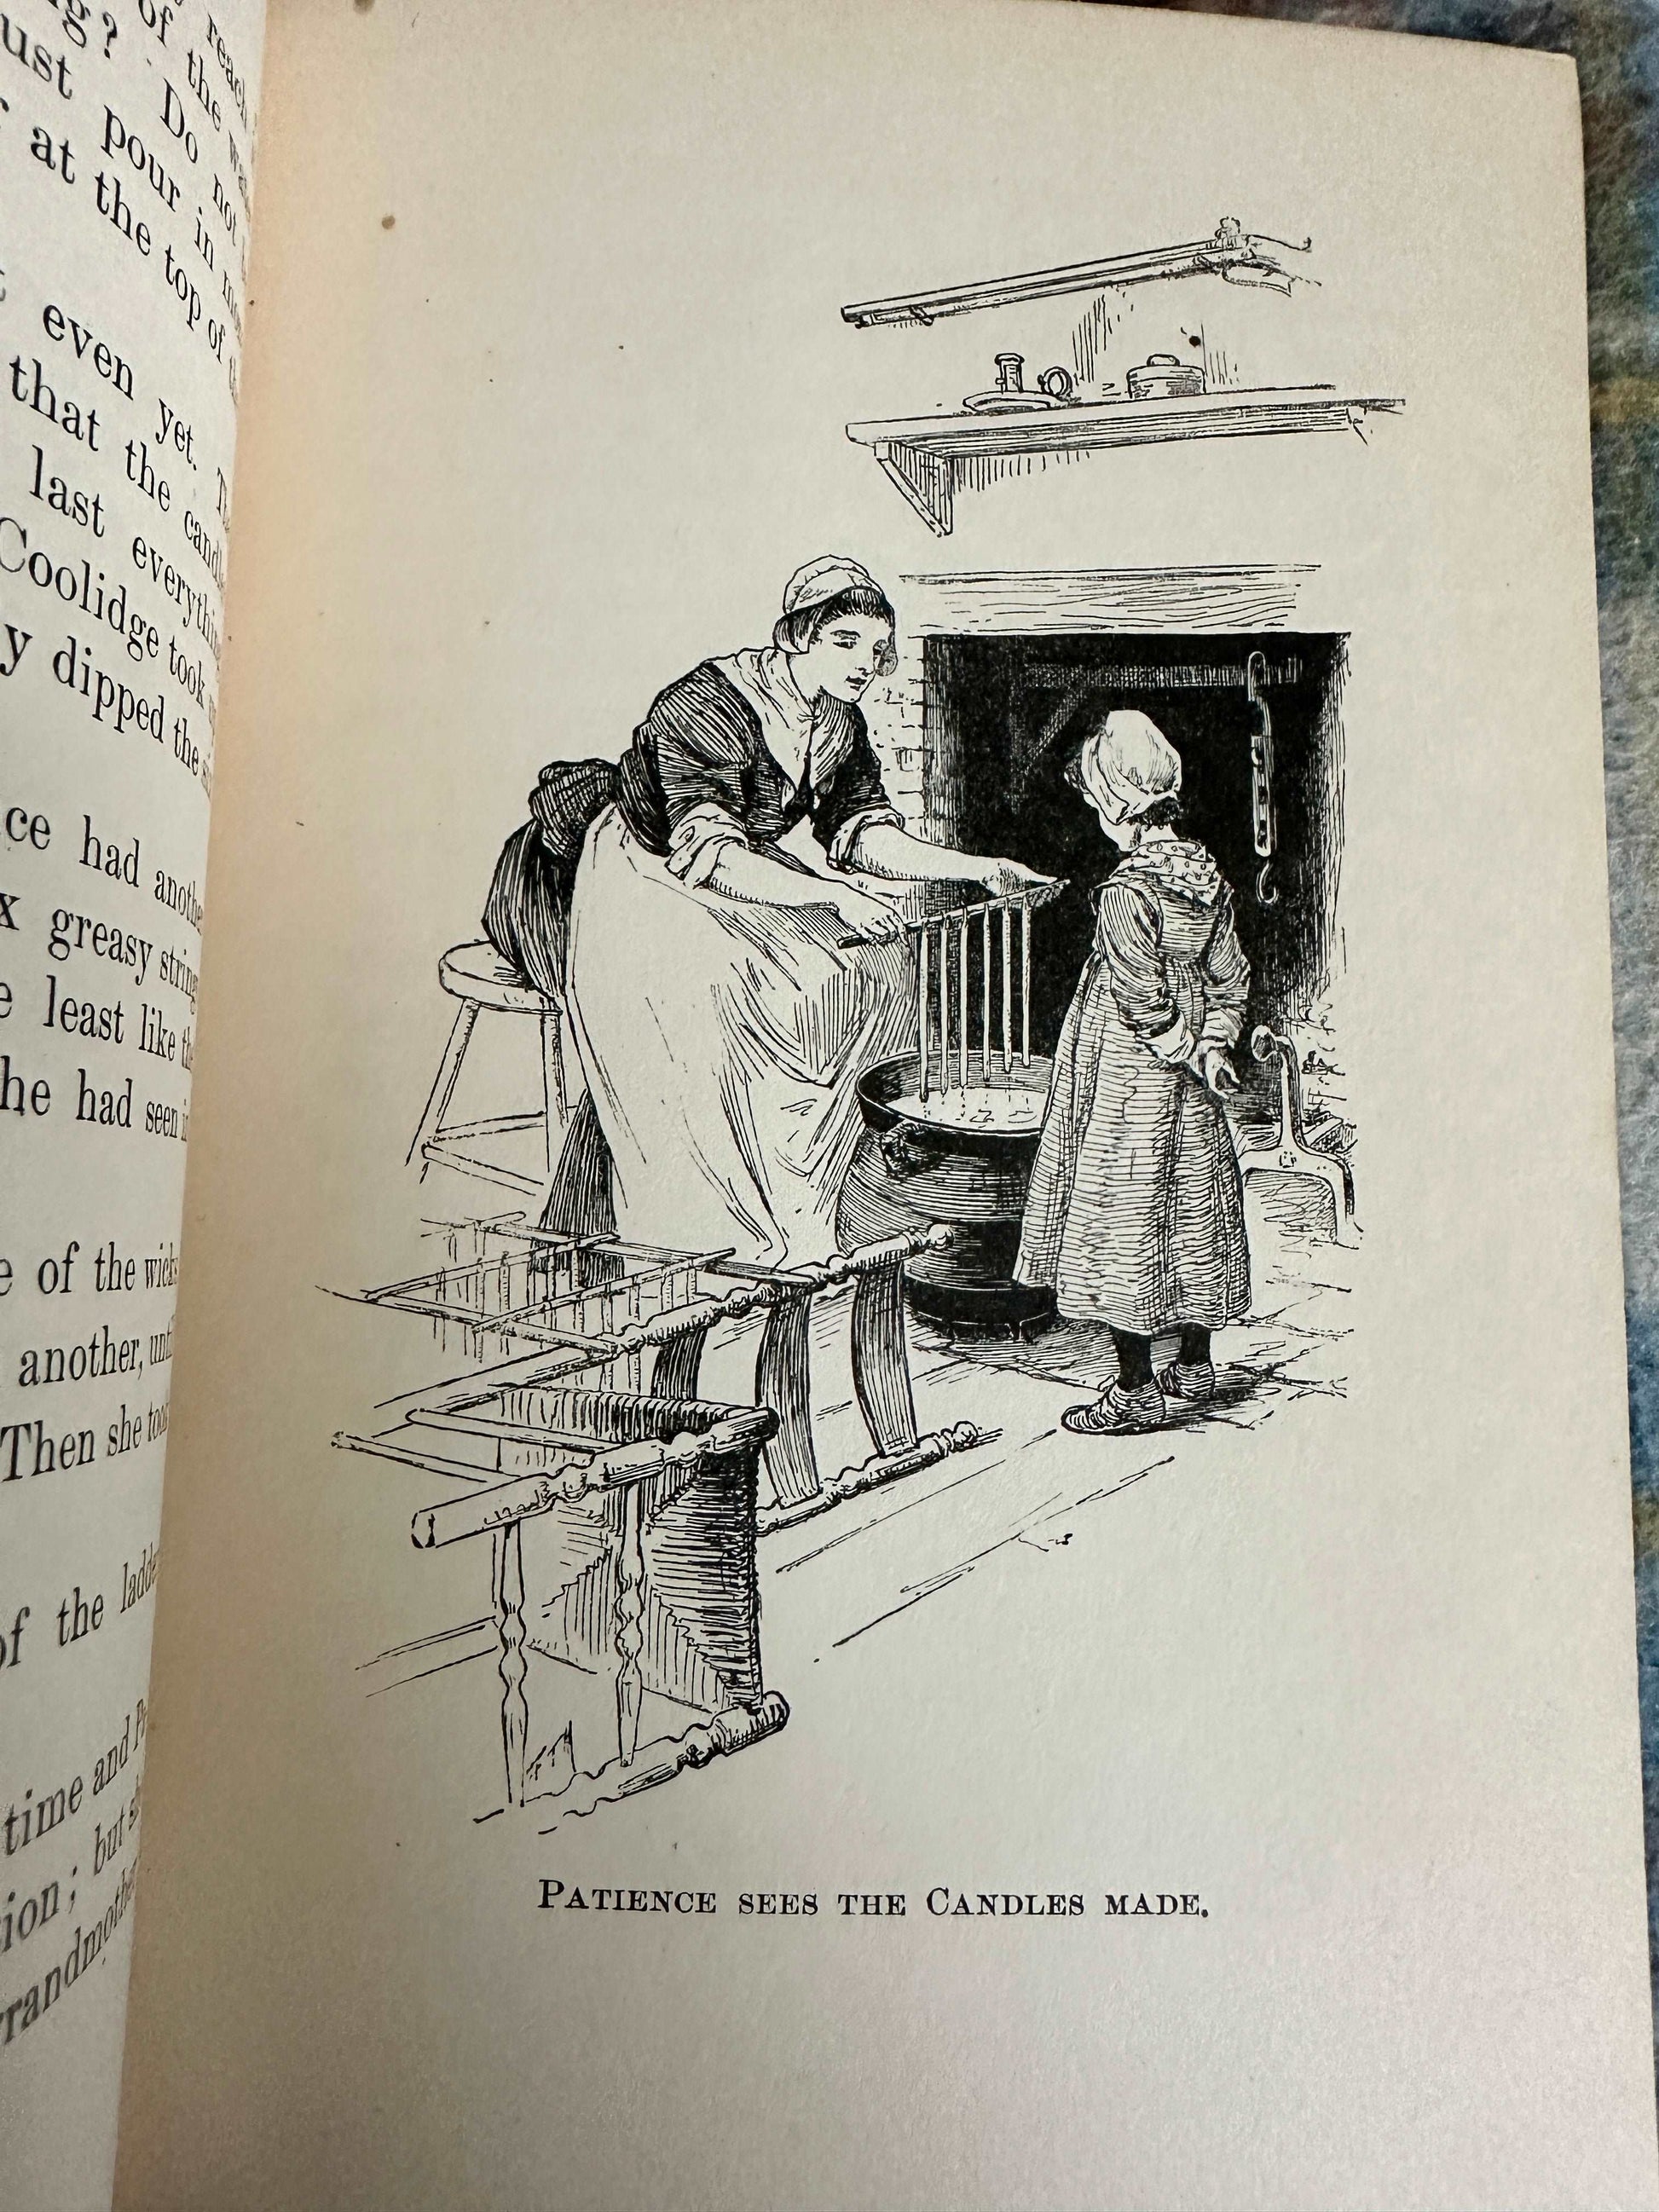 1900 Children Of The Pilgrim Fathers - Gertrude L. Stone & M. Grace Fickett(Illust Frank T. Merrill) D. C. Heath & Co